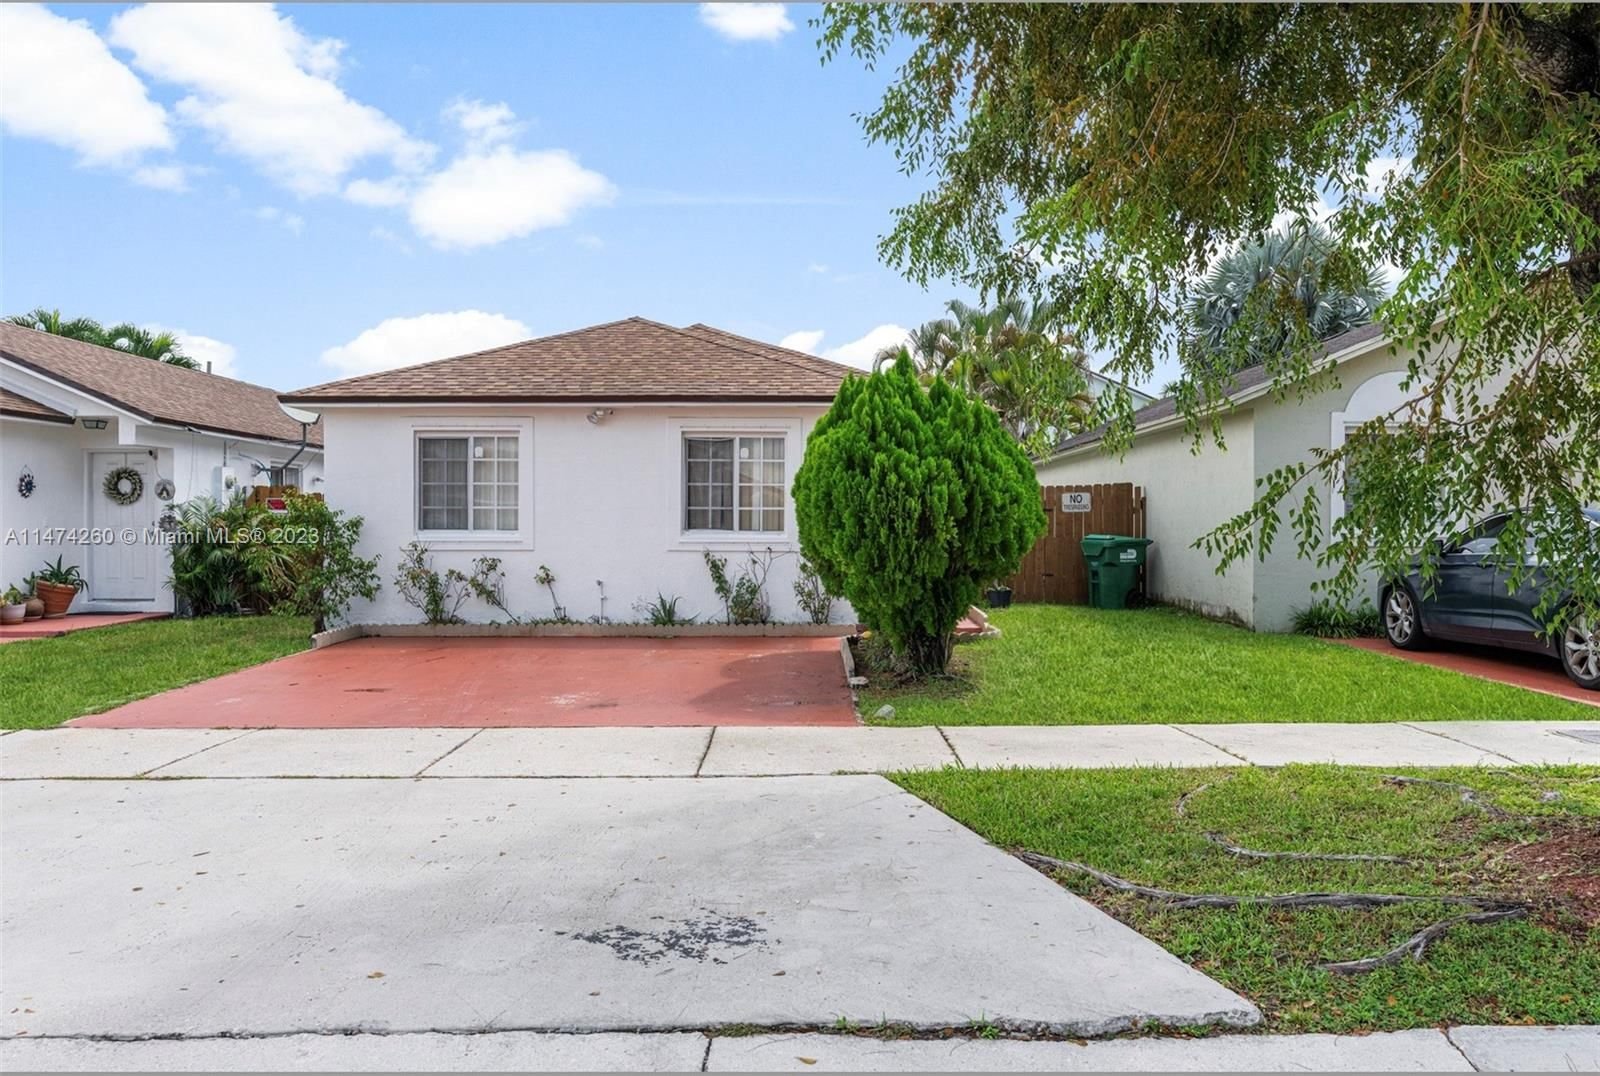 Real estate property located at 16101 139th Ave, Miami-Dade County, Miami, FL